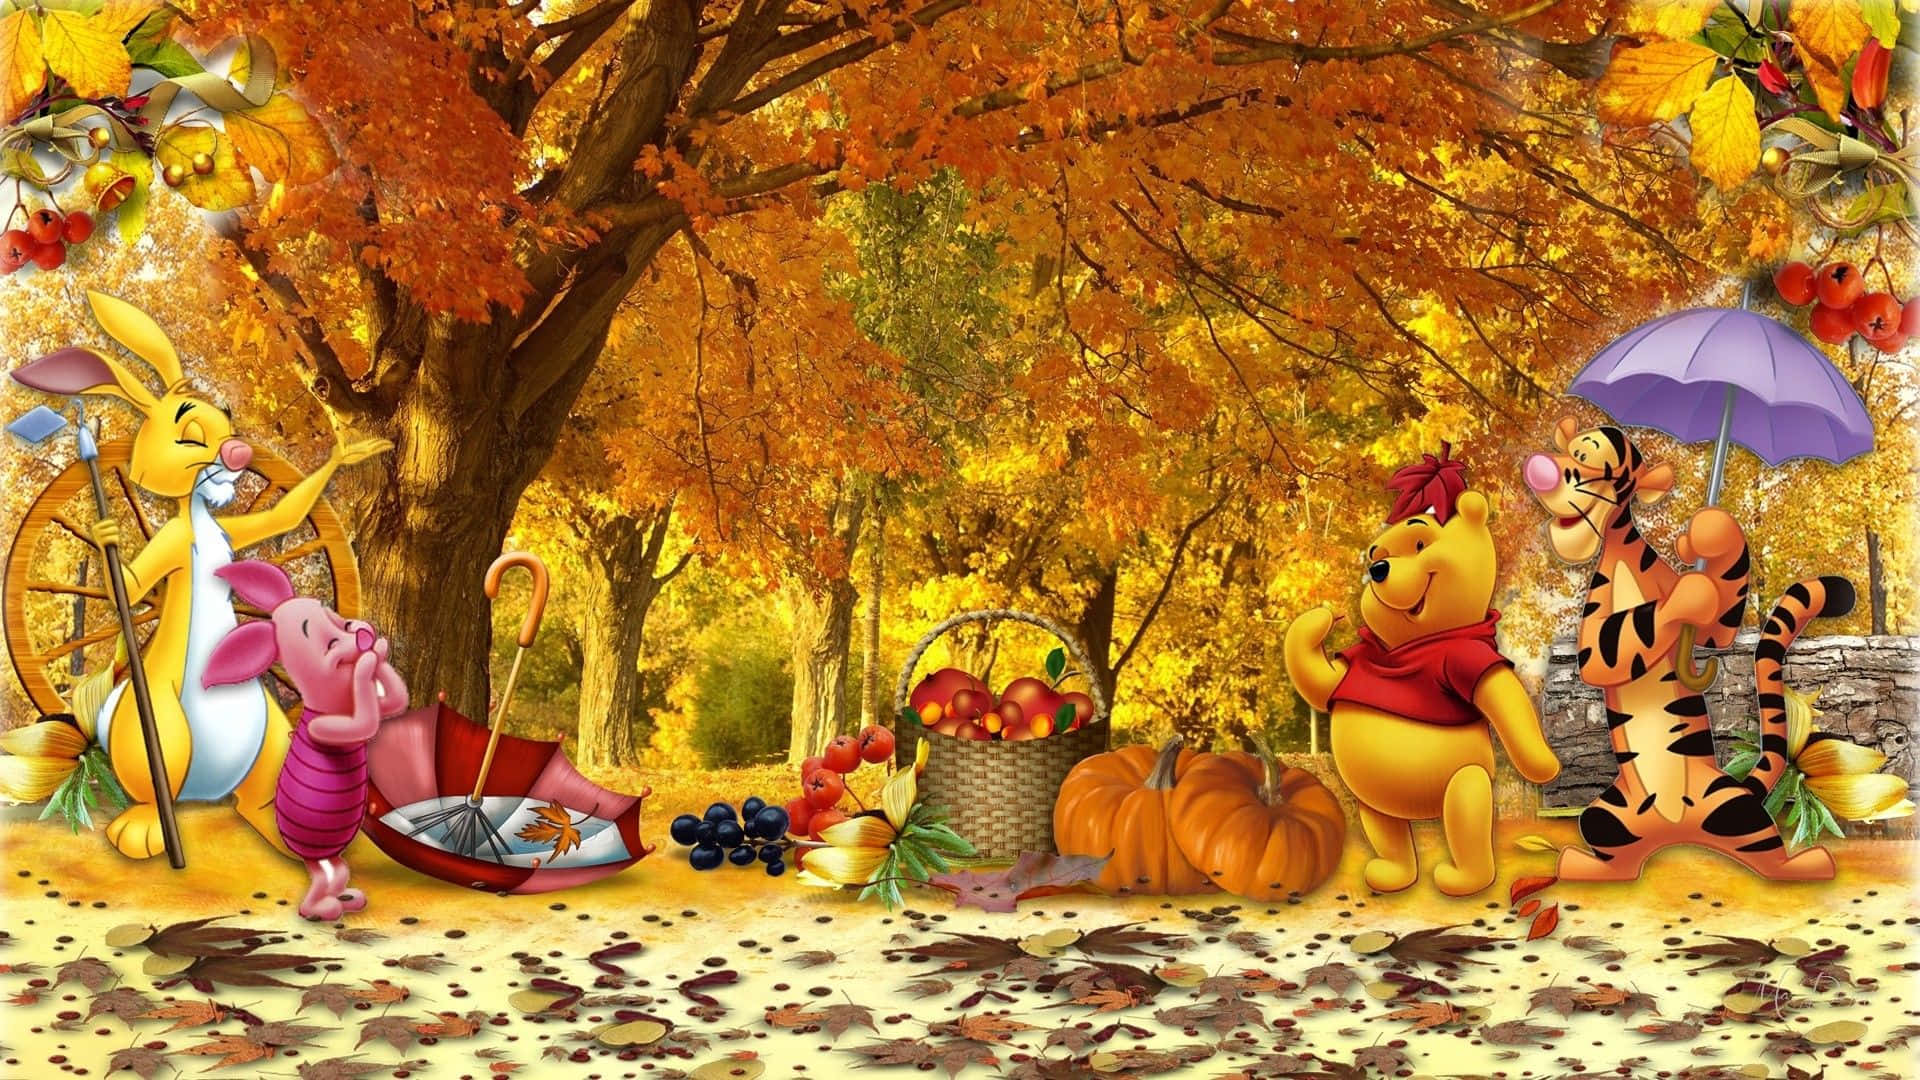 "A Lovely Desktop Featuring Winnie The Pooh" Wallpaper